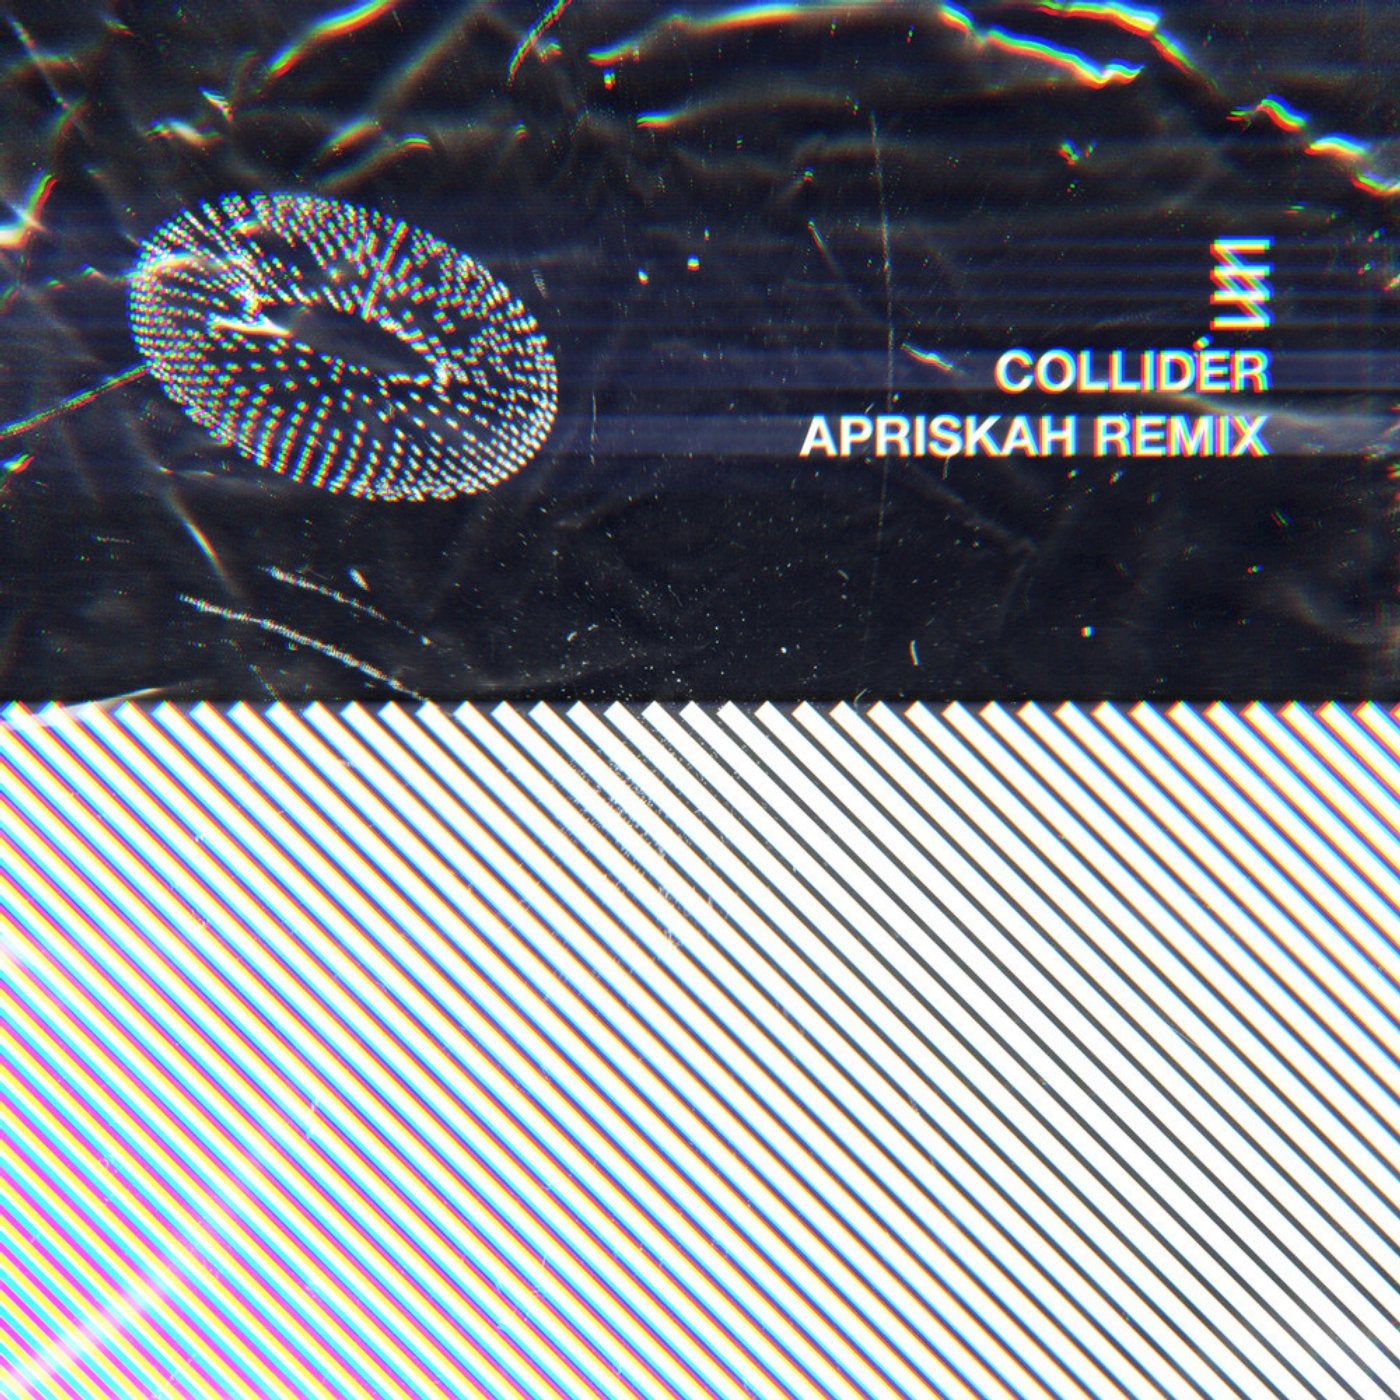 COLLIDER (Apriskah Remix)